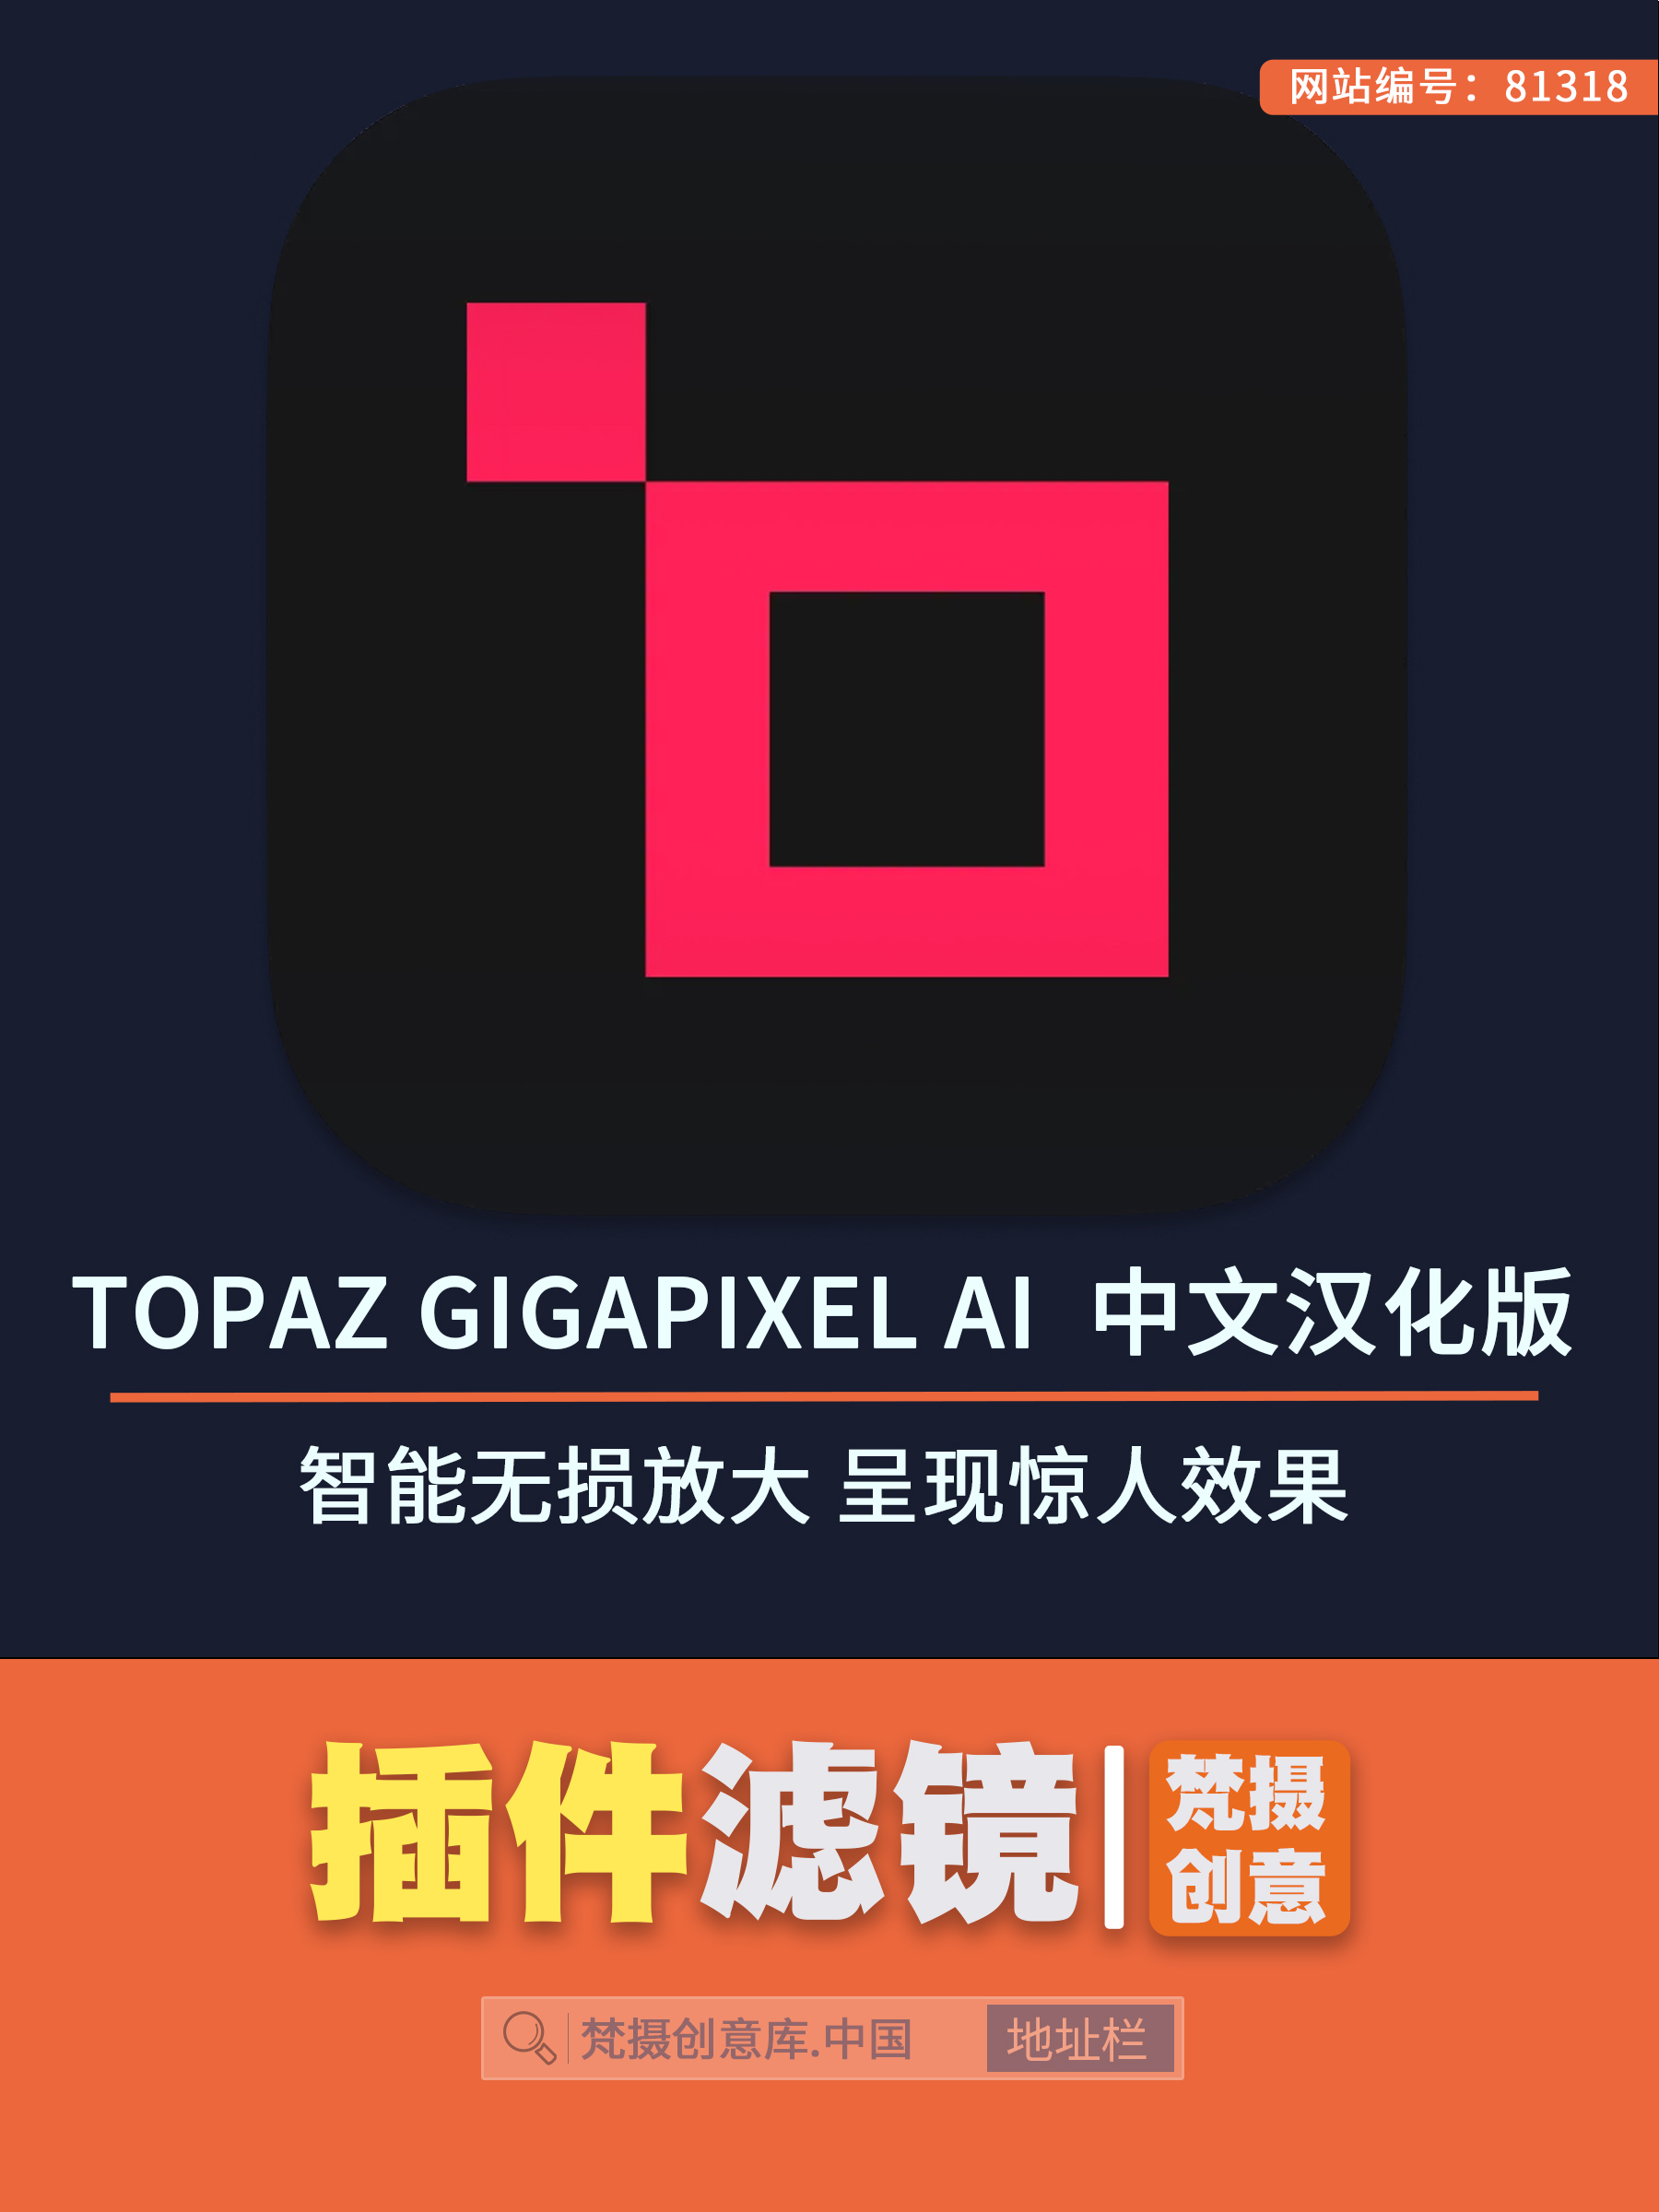 AI图片放大器 Topaz Gigapixel AI 让照片细节更清晰-梵摄创意库